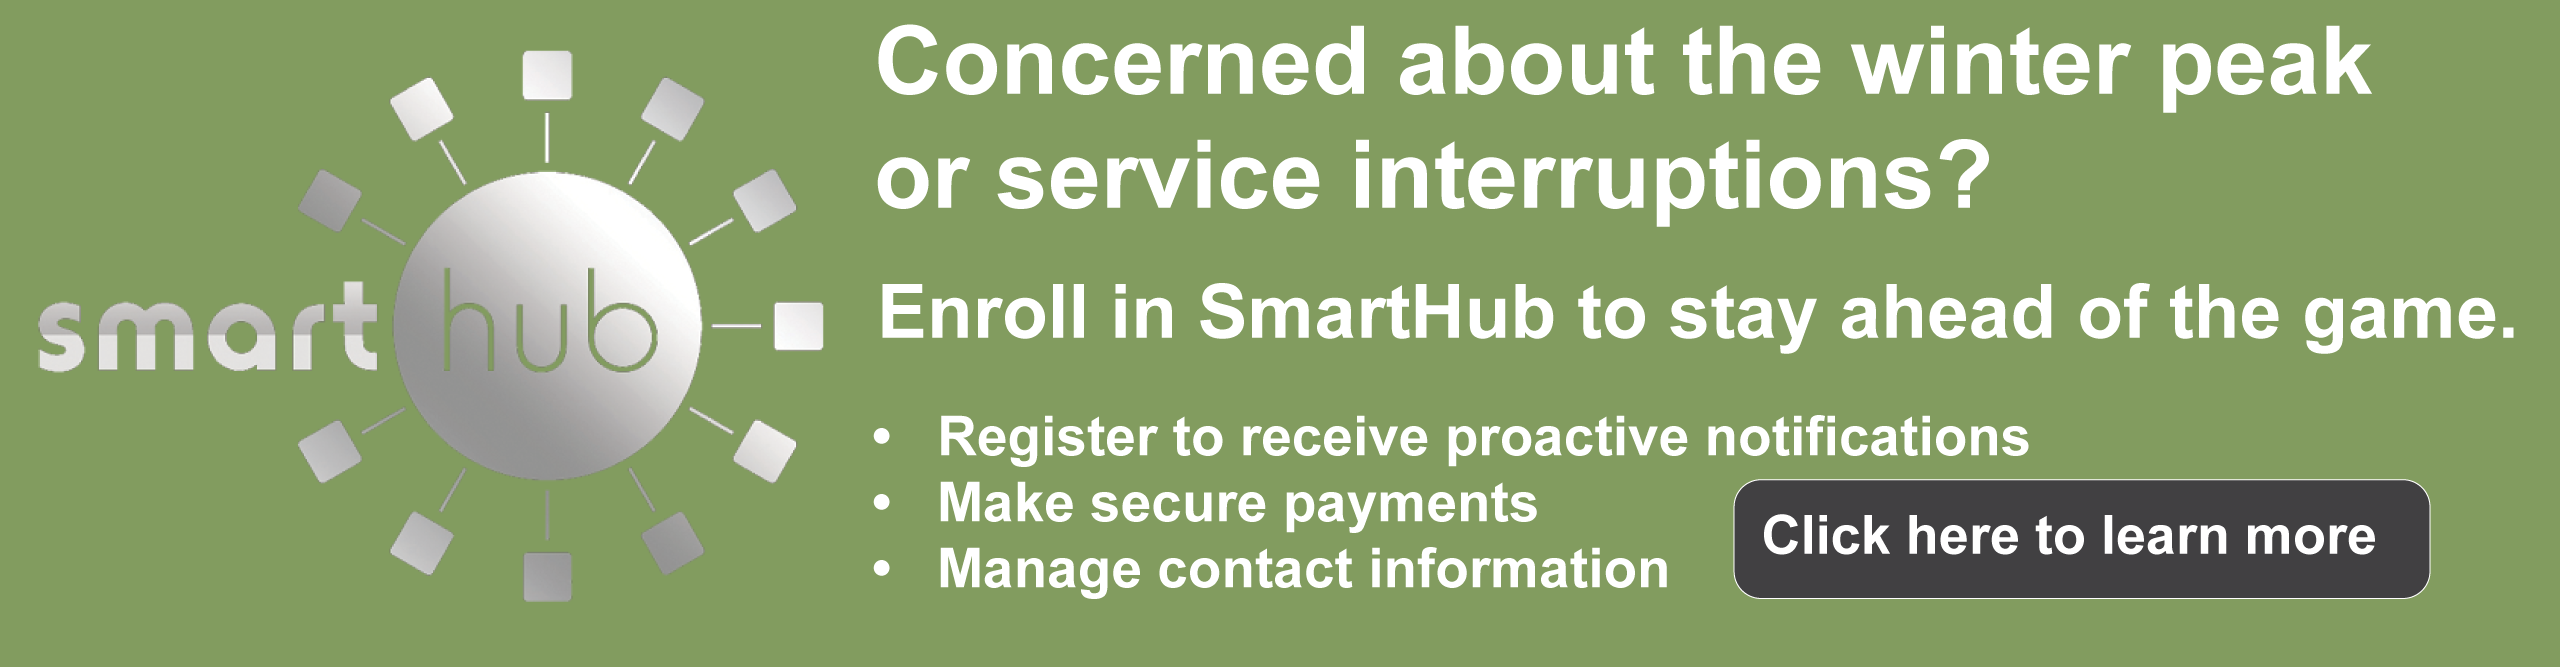 SmartHub registration information